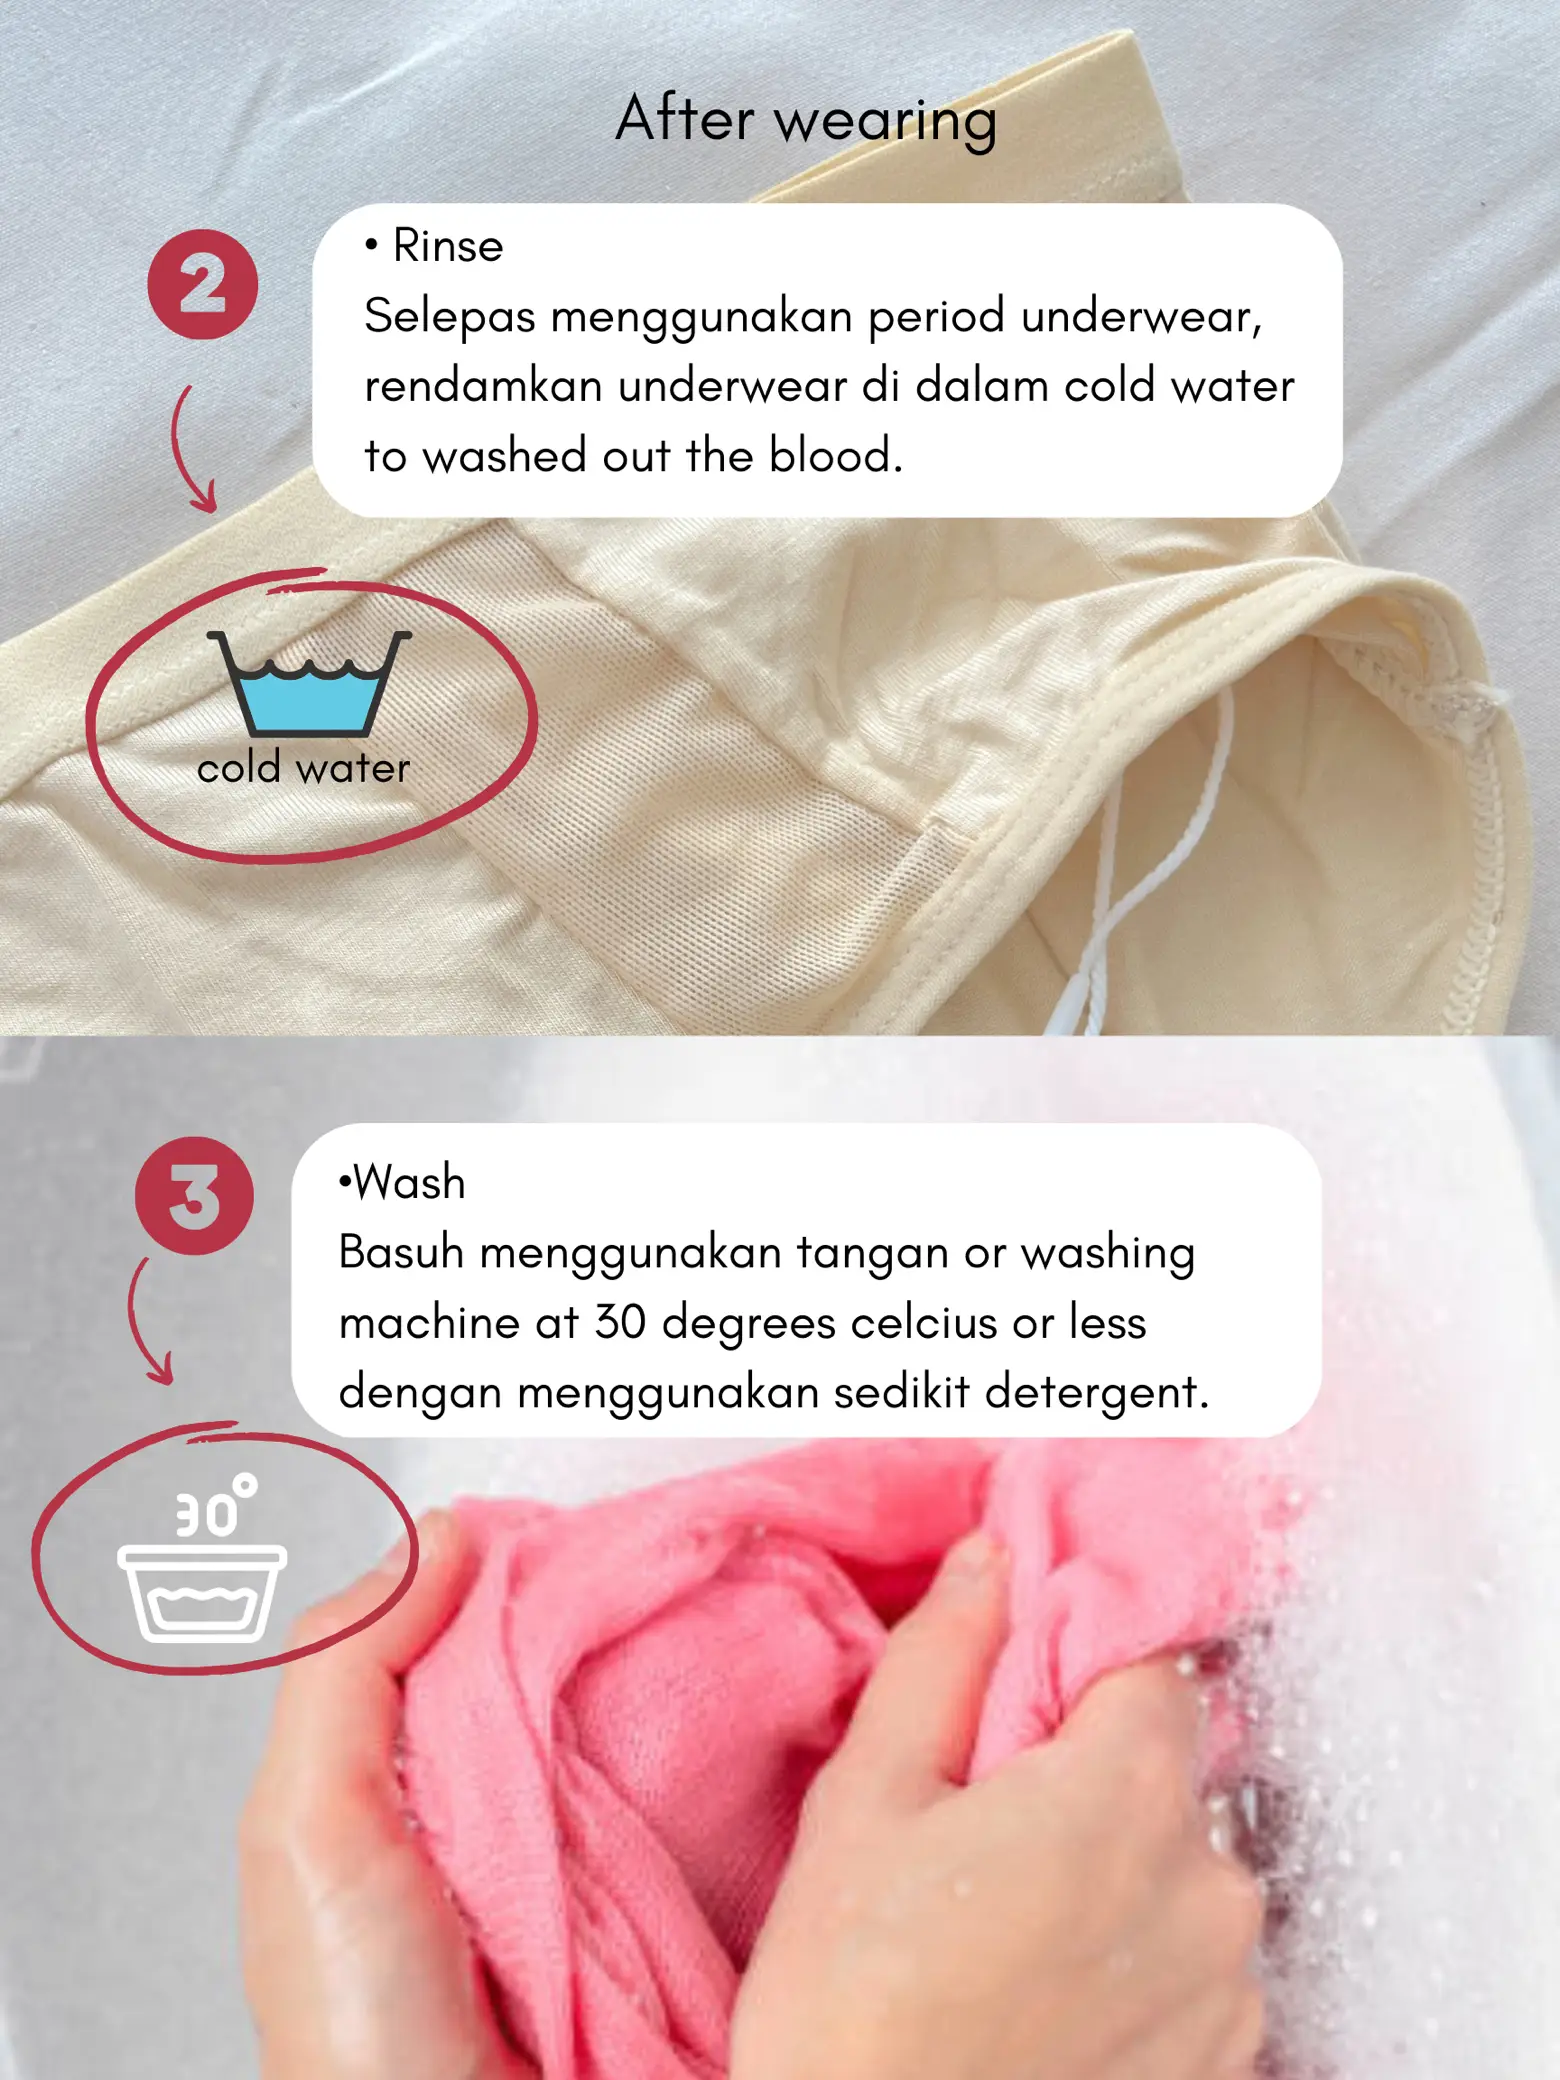 How to Wash Your Period Underwear?